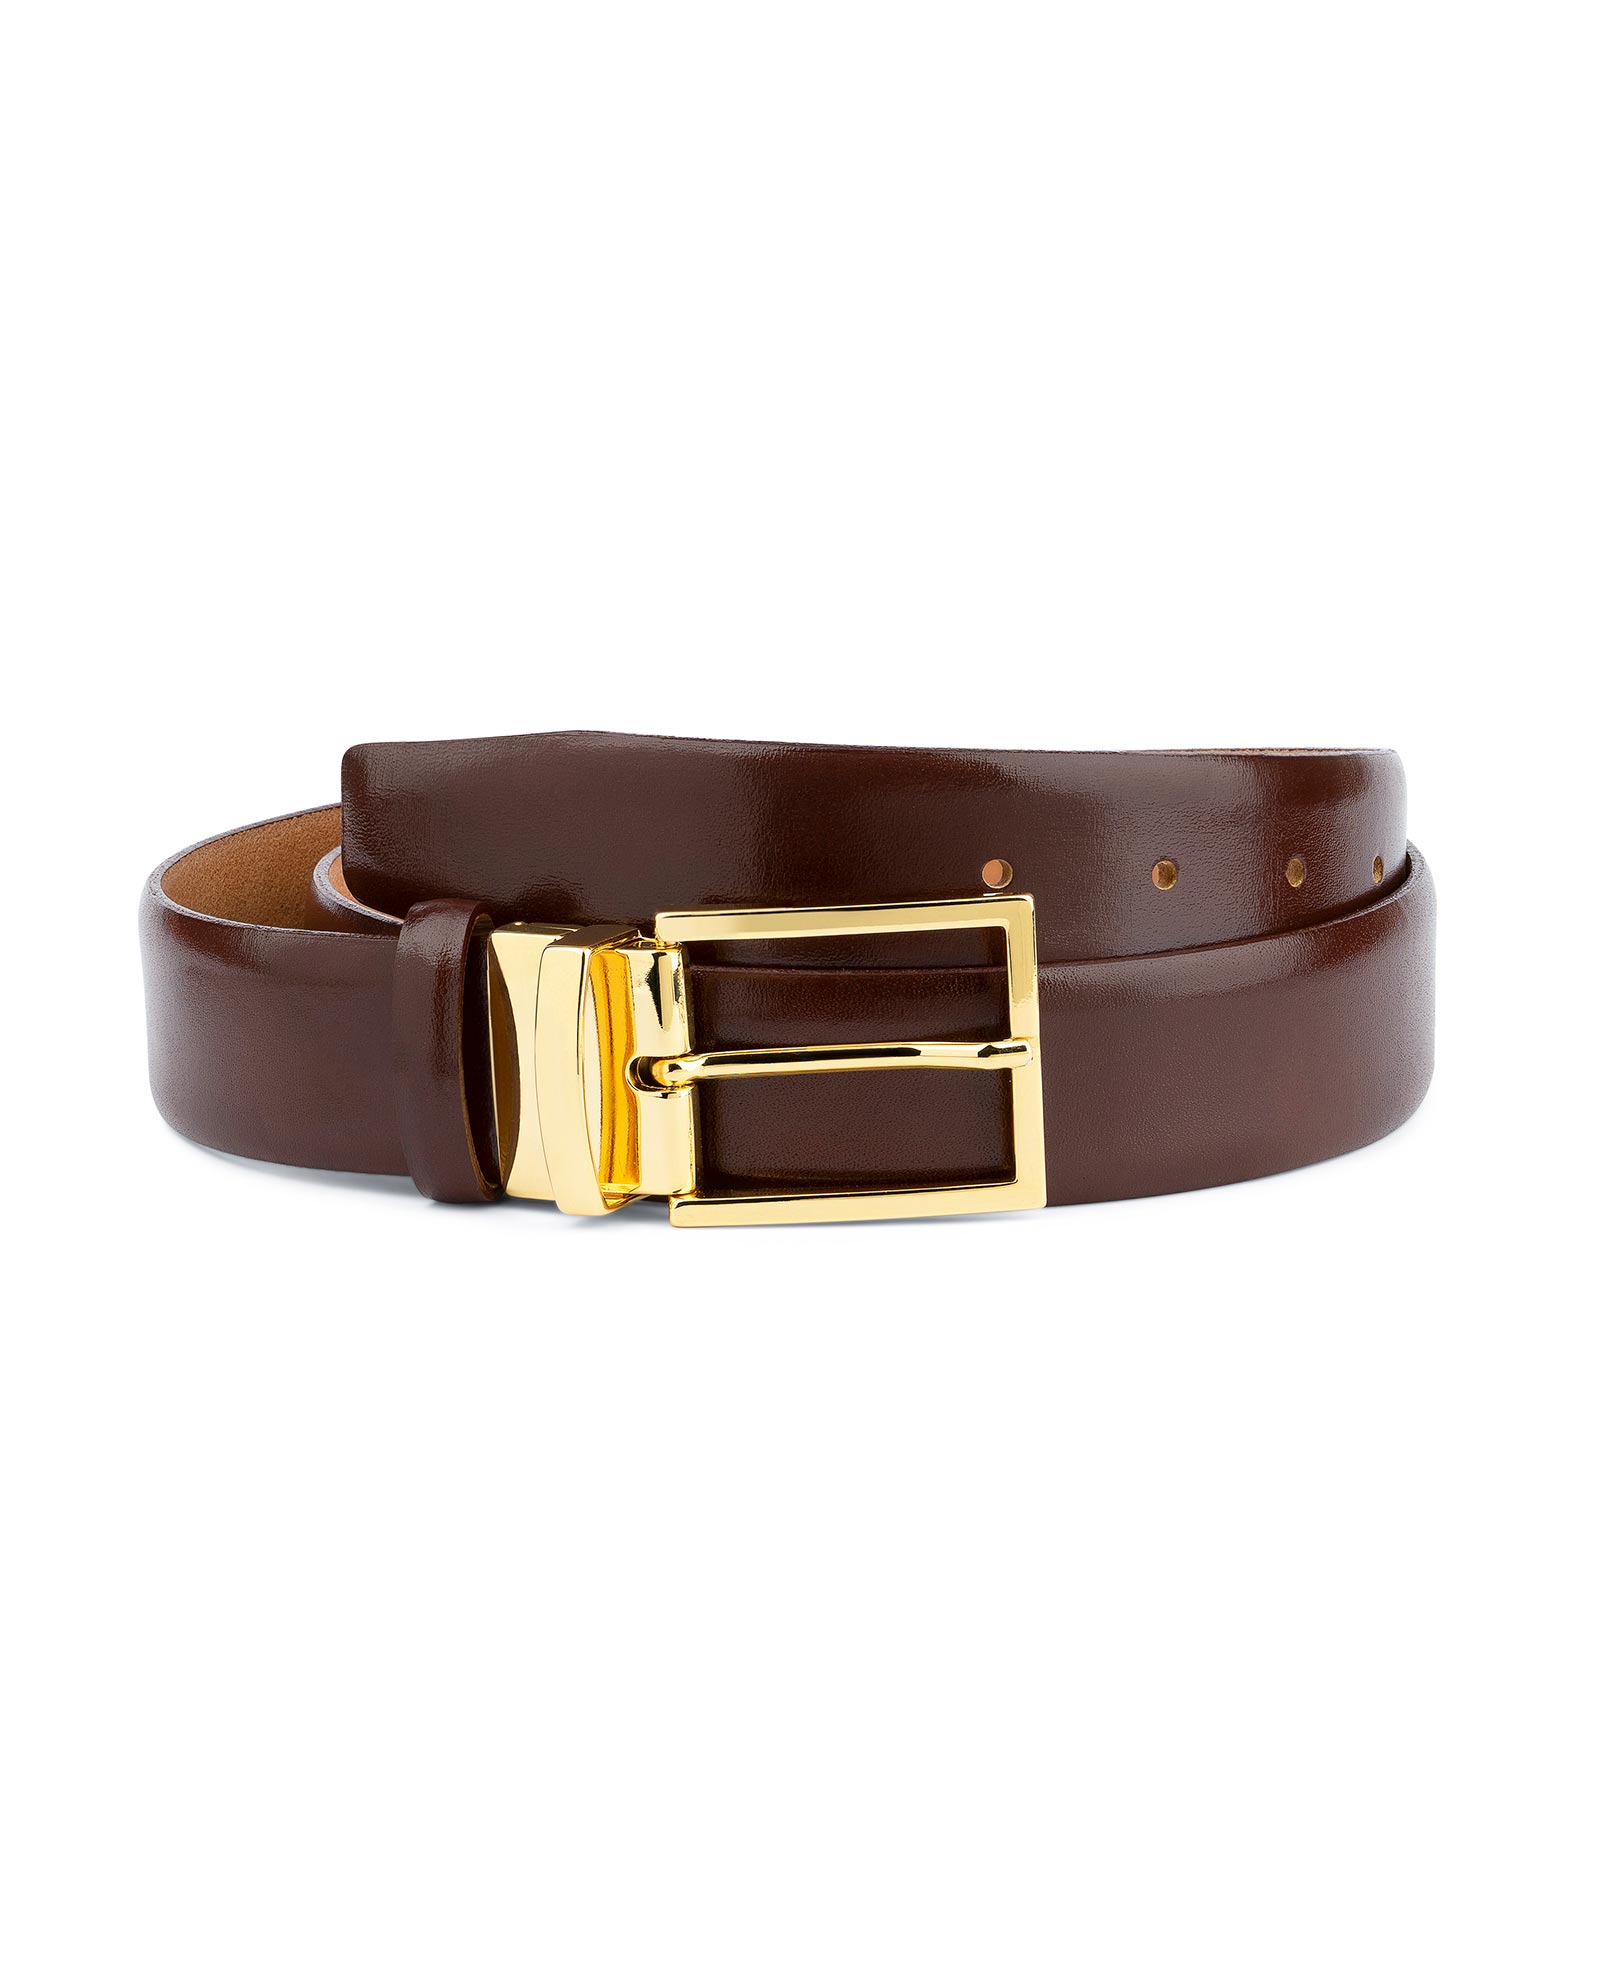 Brown belt With gold buckle Mens belts Cognac Leather Tan Dress For suit pants | eBay